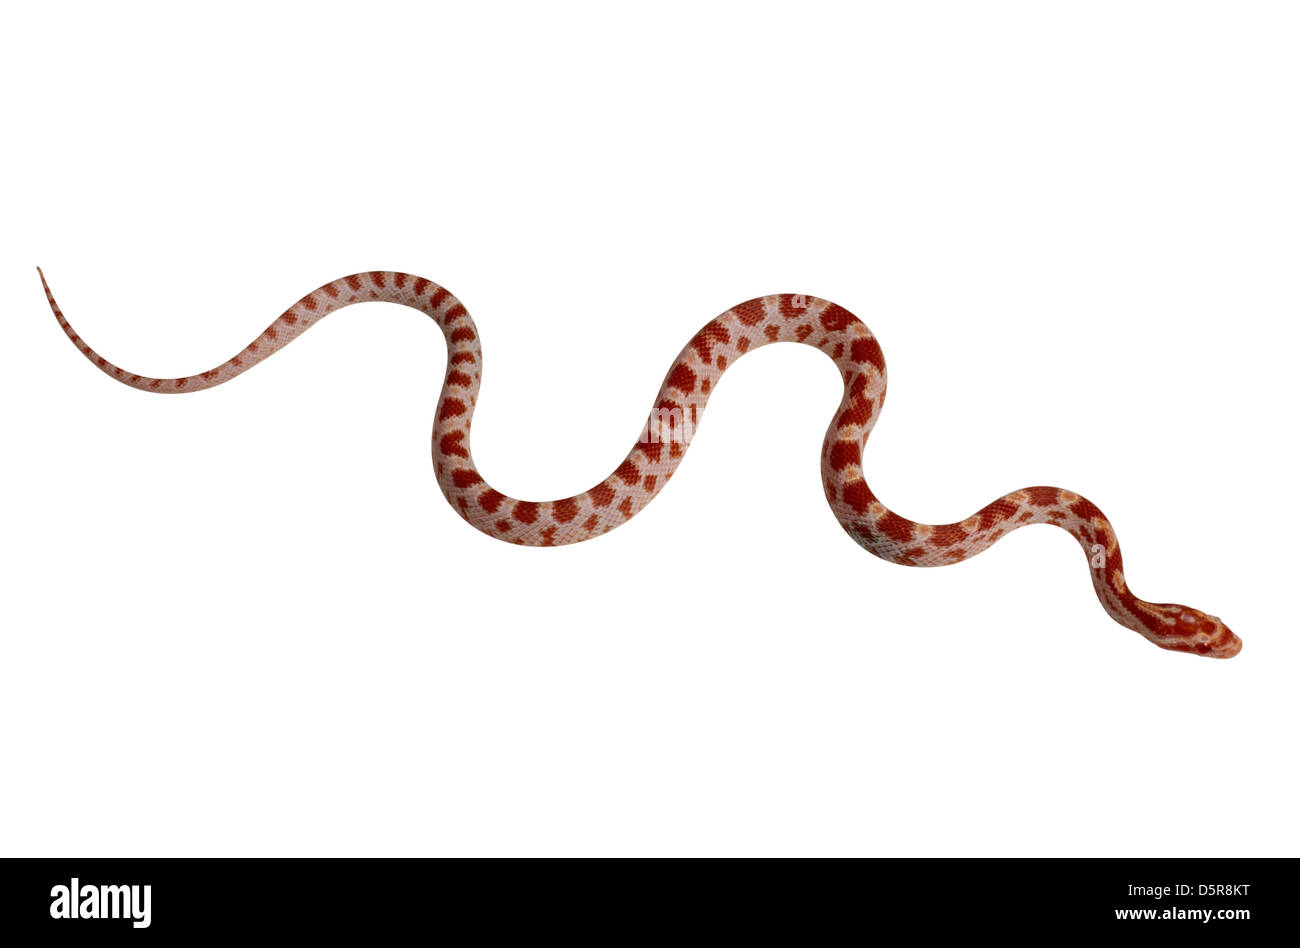 Snake aislado sobre fondo blanco. Foto de stock